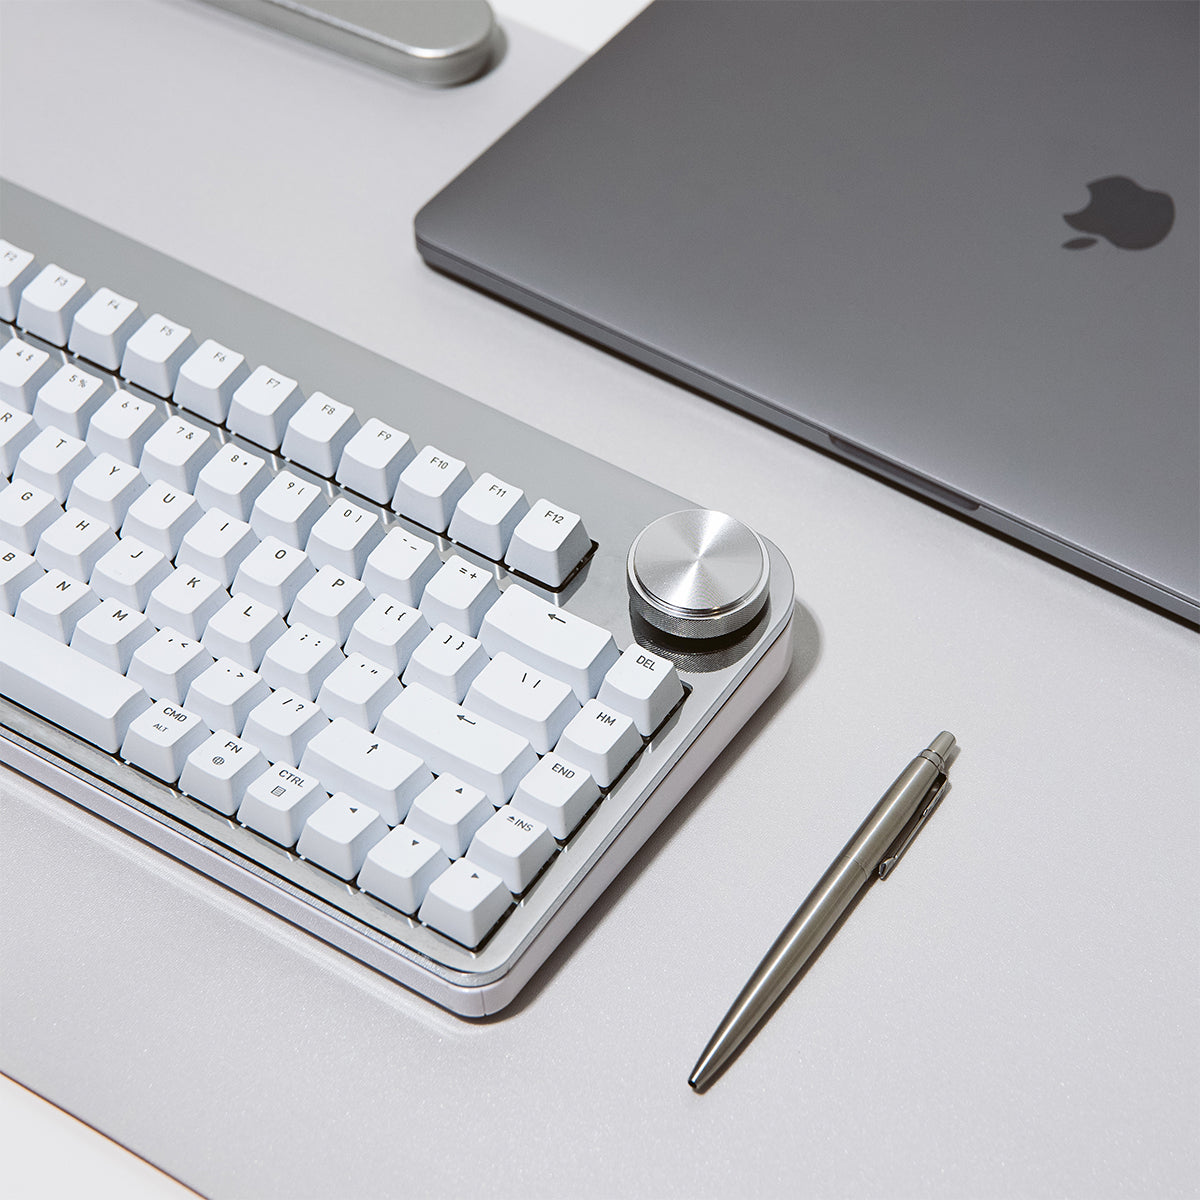 Tera75 trådløst tastatur